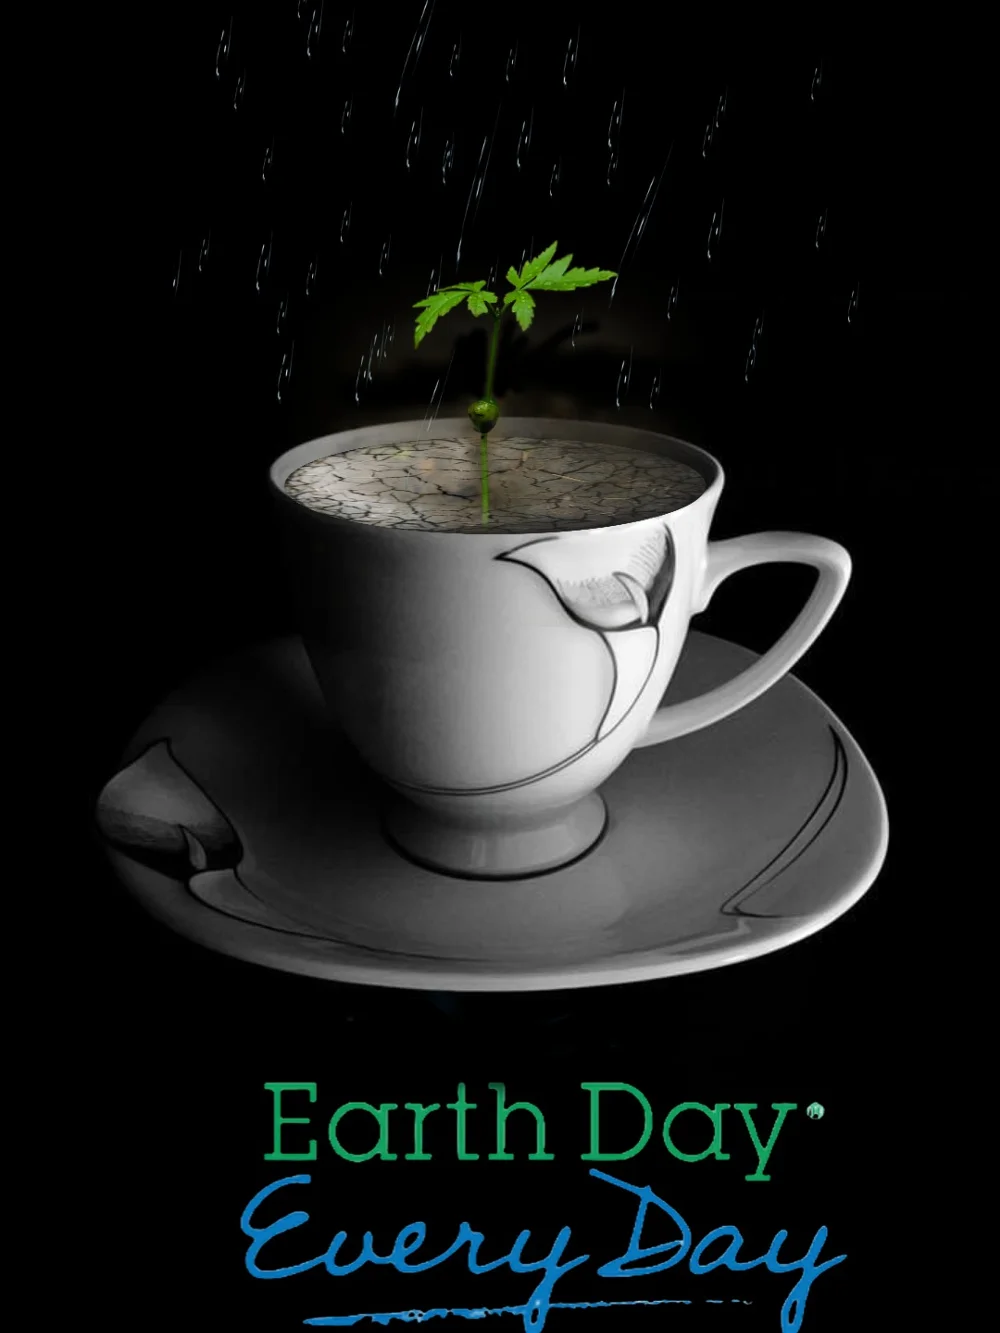 #happyEarthday #EarthDay #earthday2021 Thanks